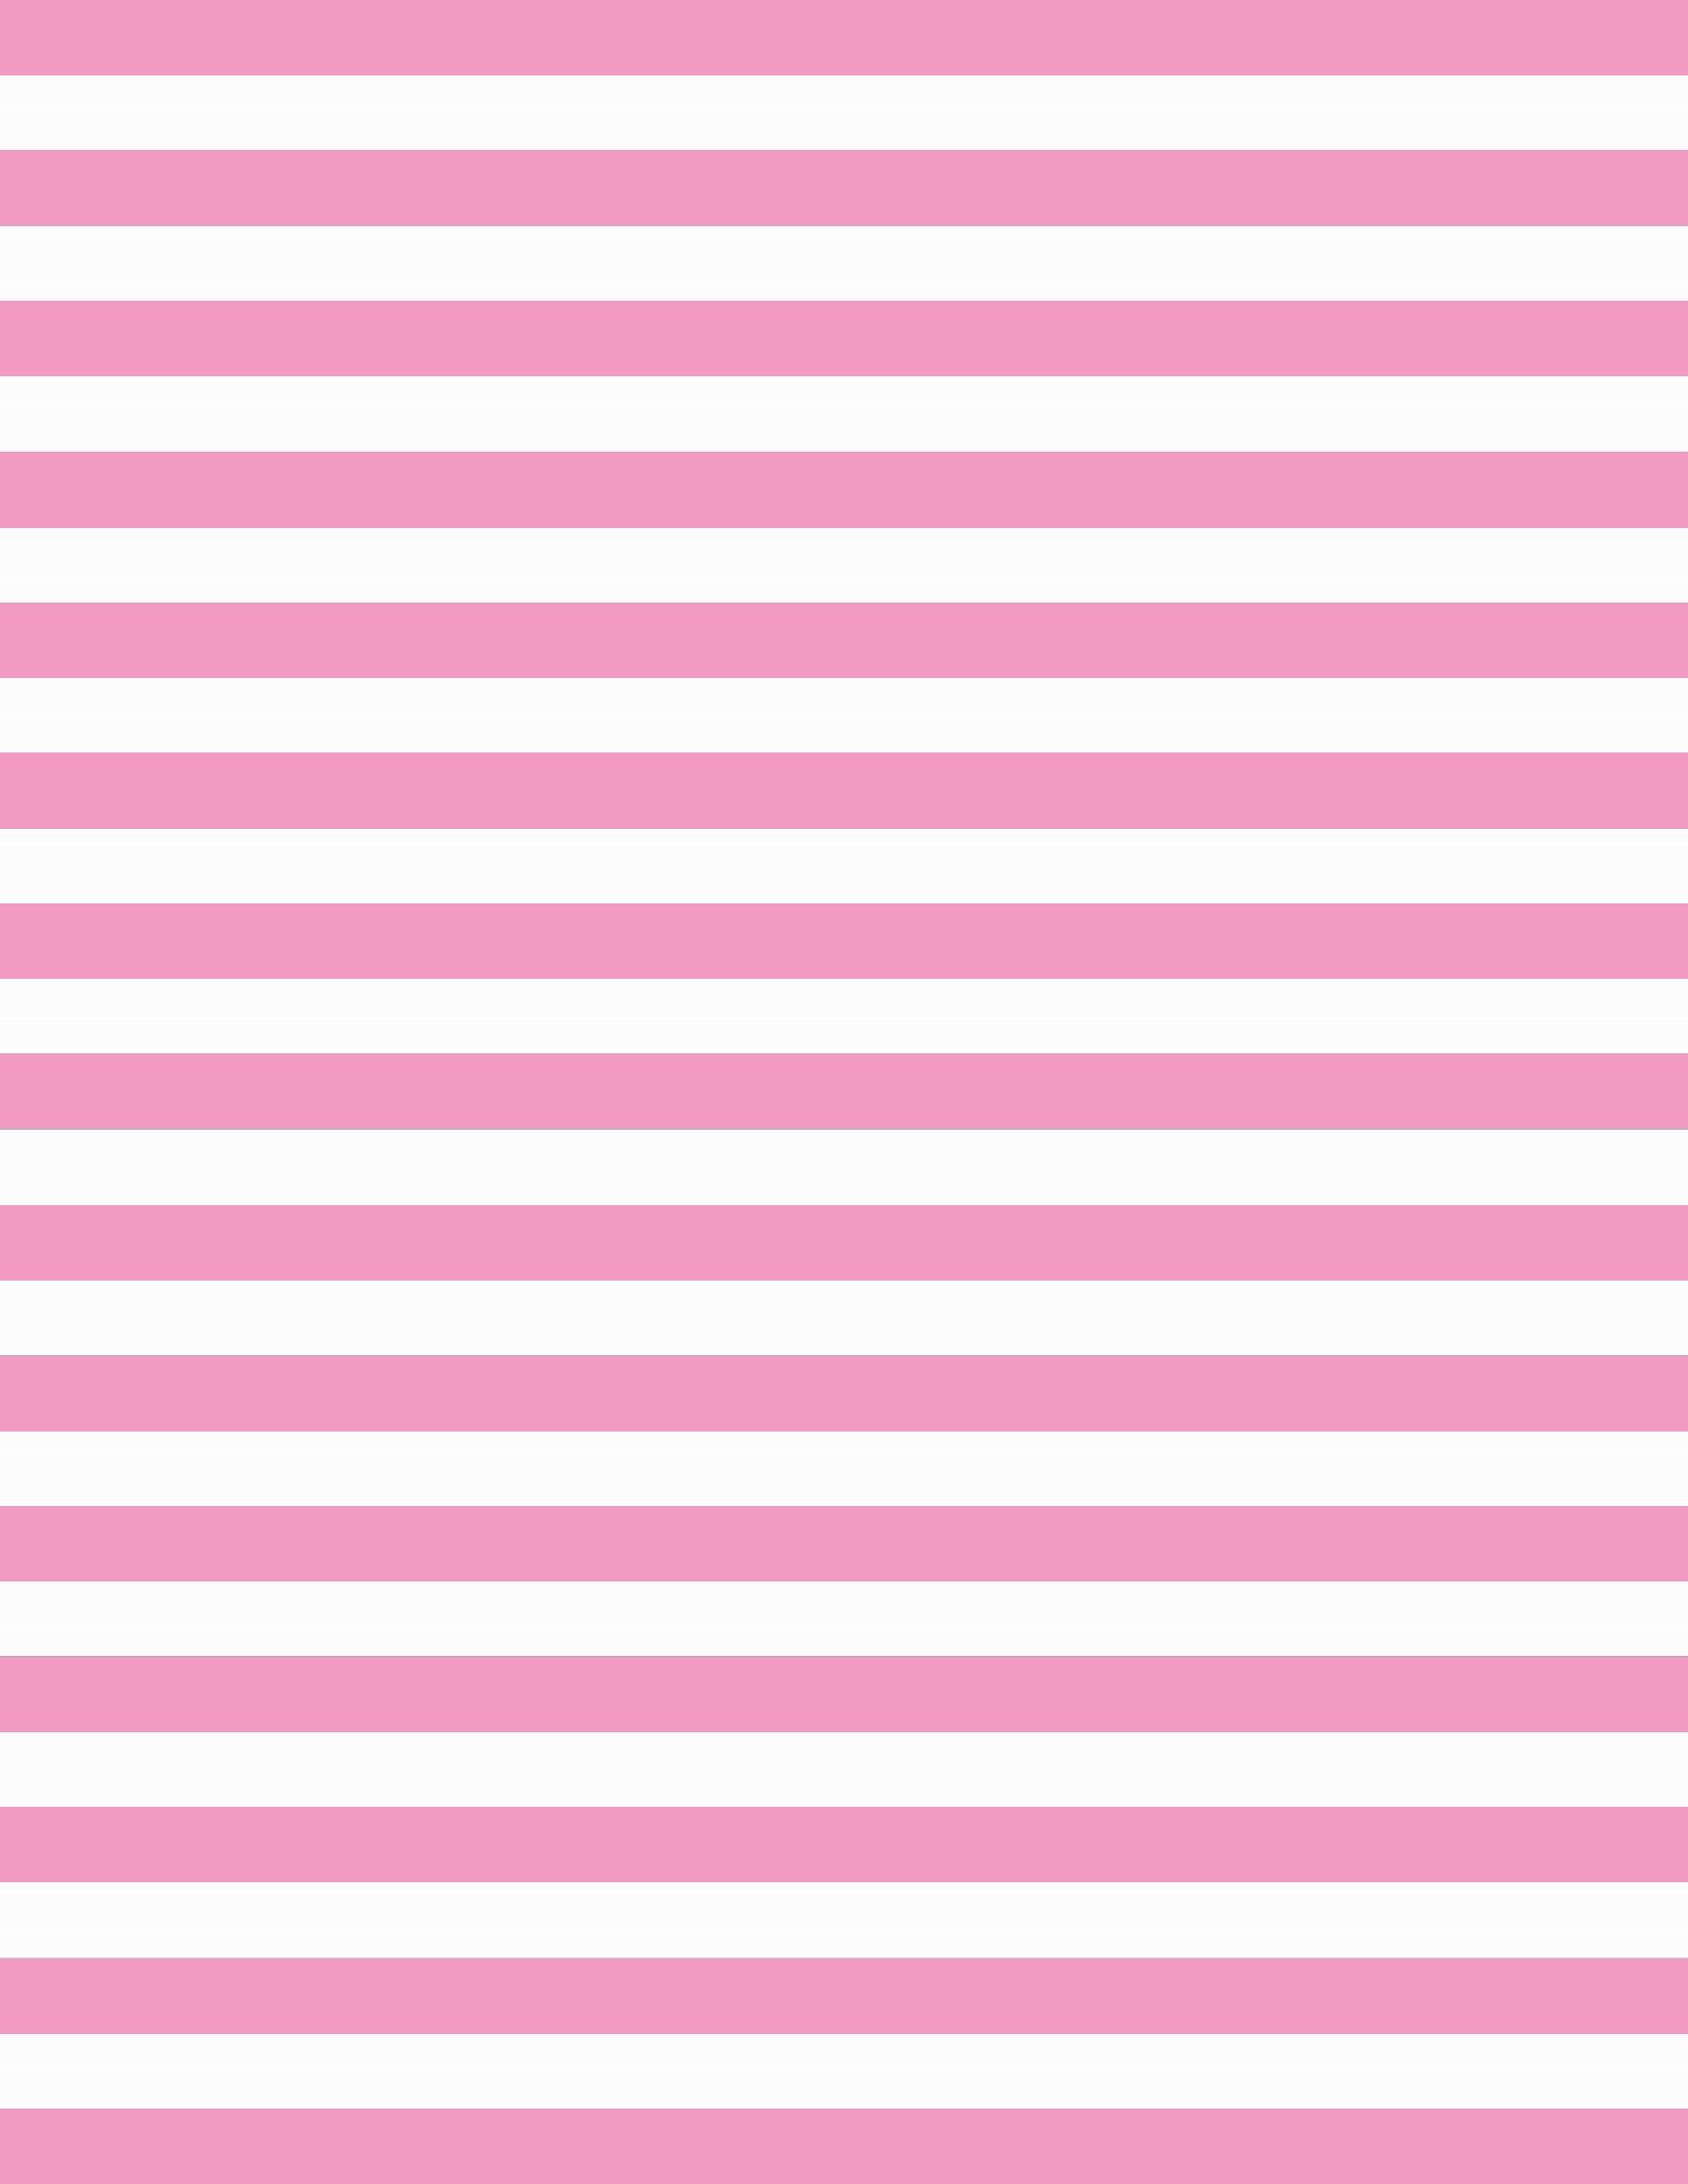 Pink White Stripes Images  Free Download on Freepik